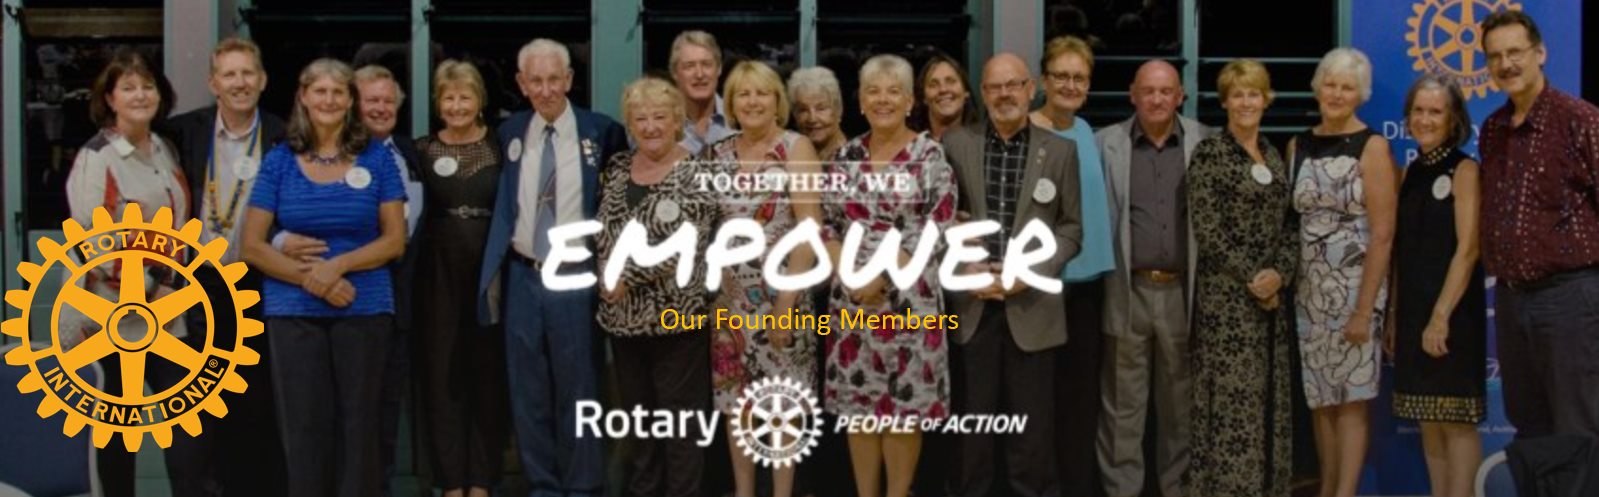 Rotary Discovery Coast Founding Members